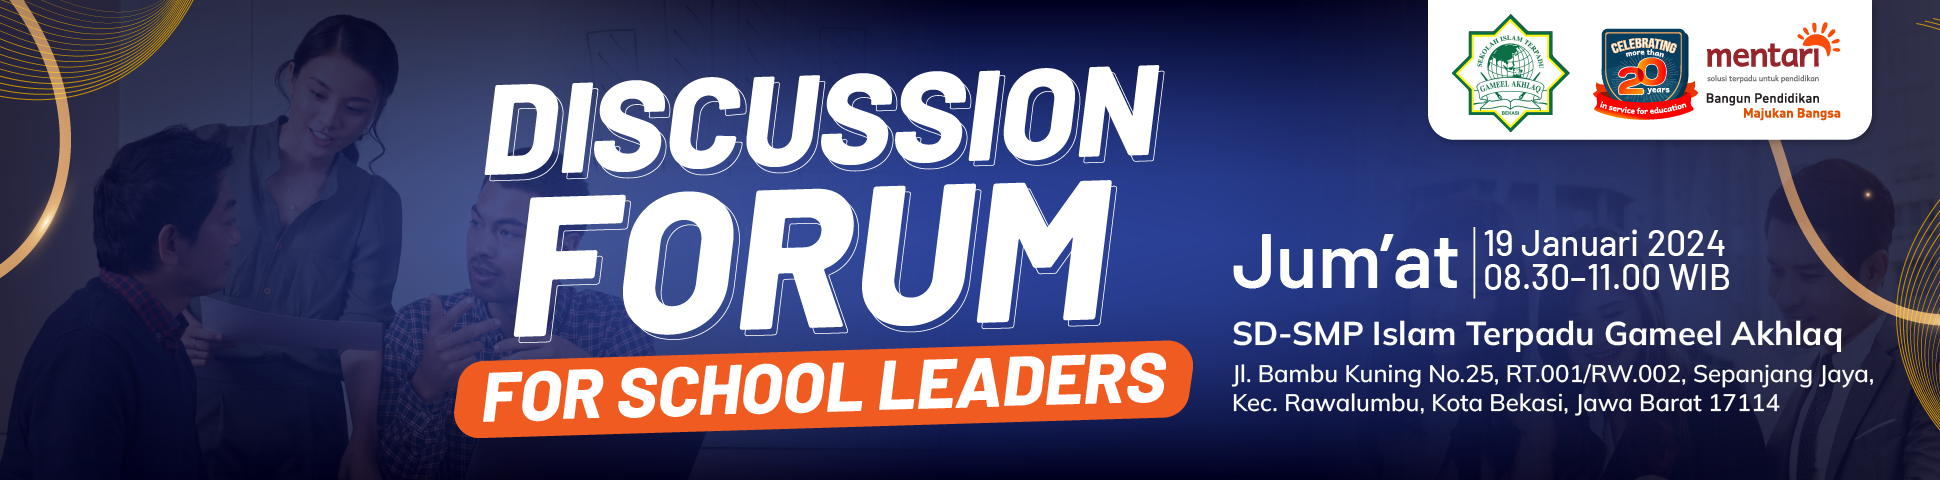 Discussion Forum for School Leaders - Bekasi